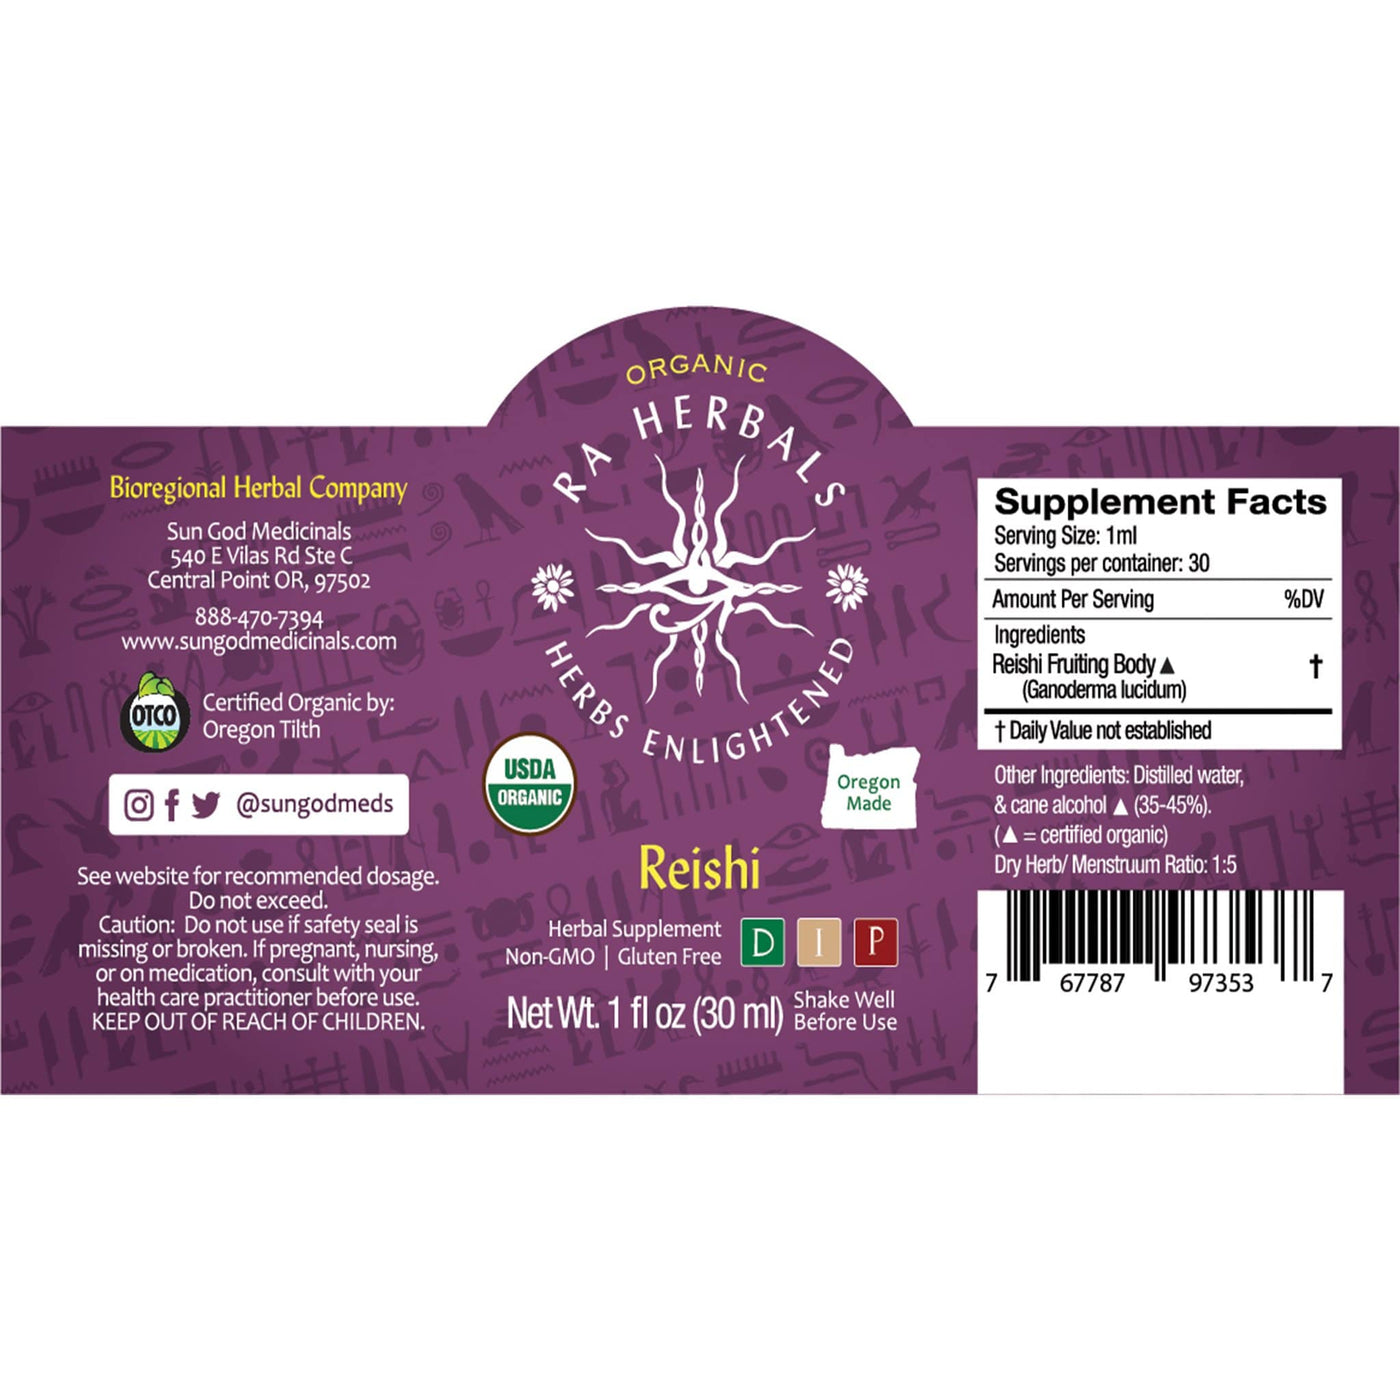 Ra Herbals Certified Organic Reishi Tincture - Sun God Medicinals